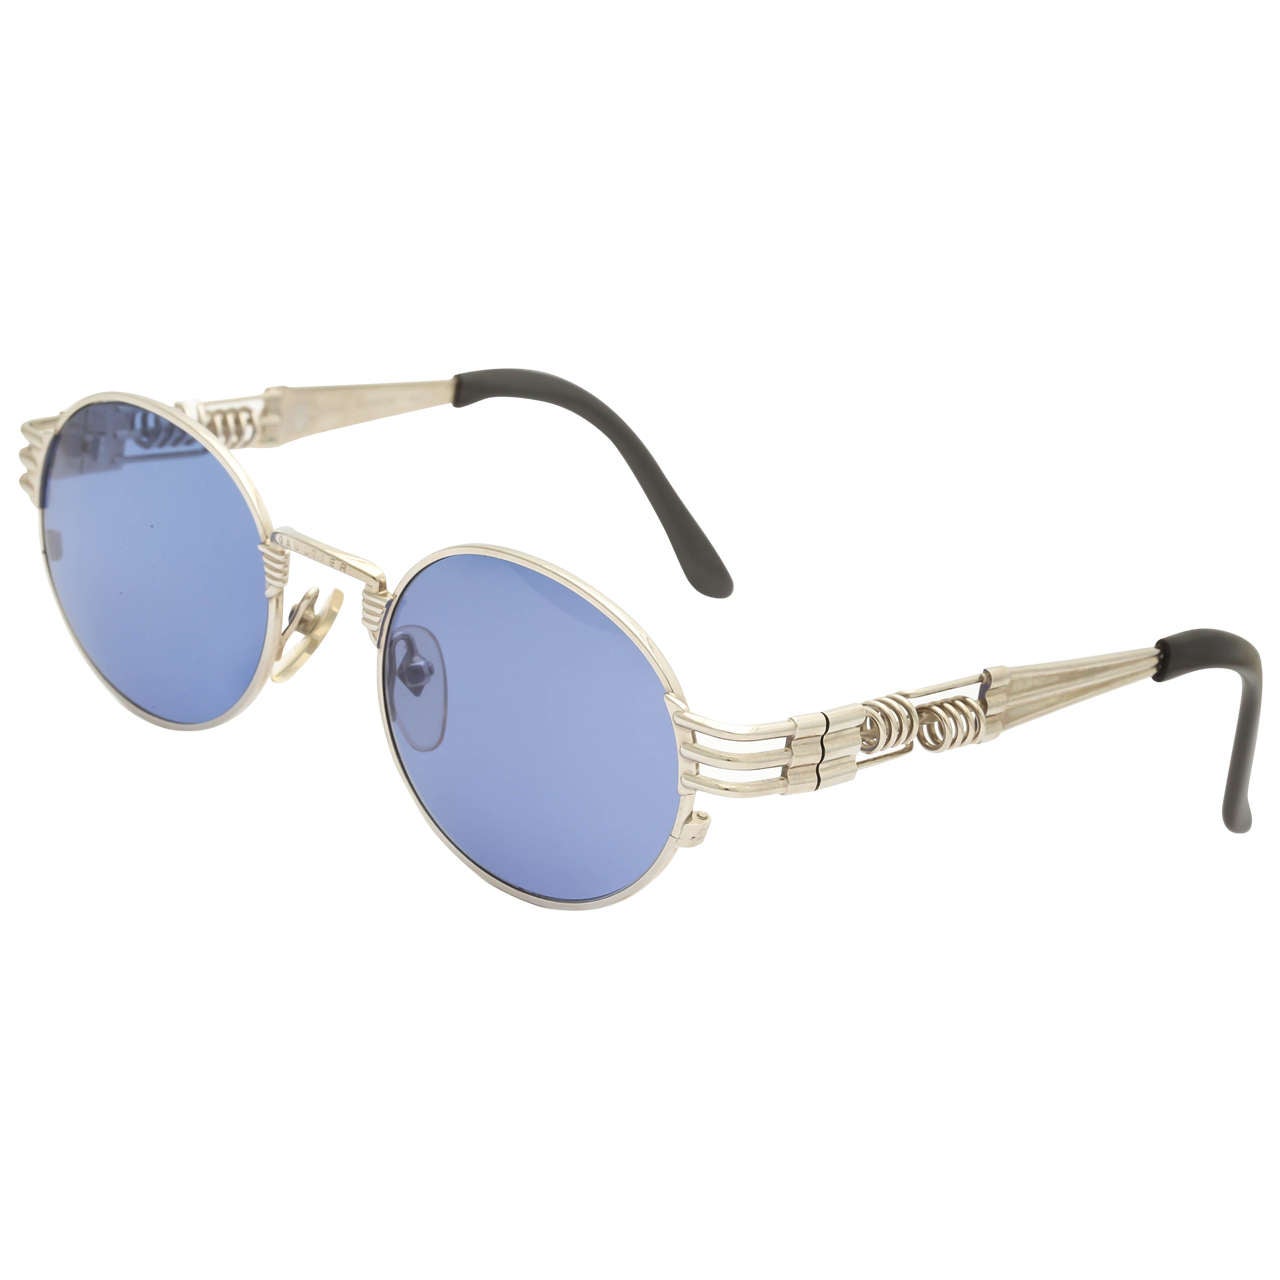 Jean Paul Gaultier 56-6106 Vintage Silver Sunglasses For Sale